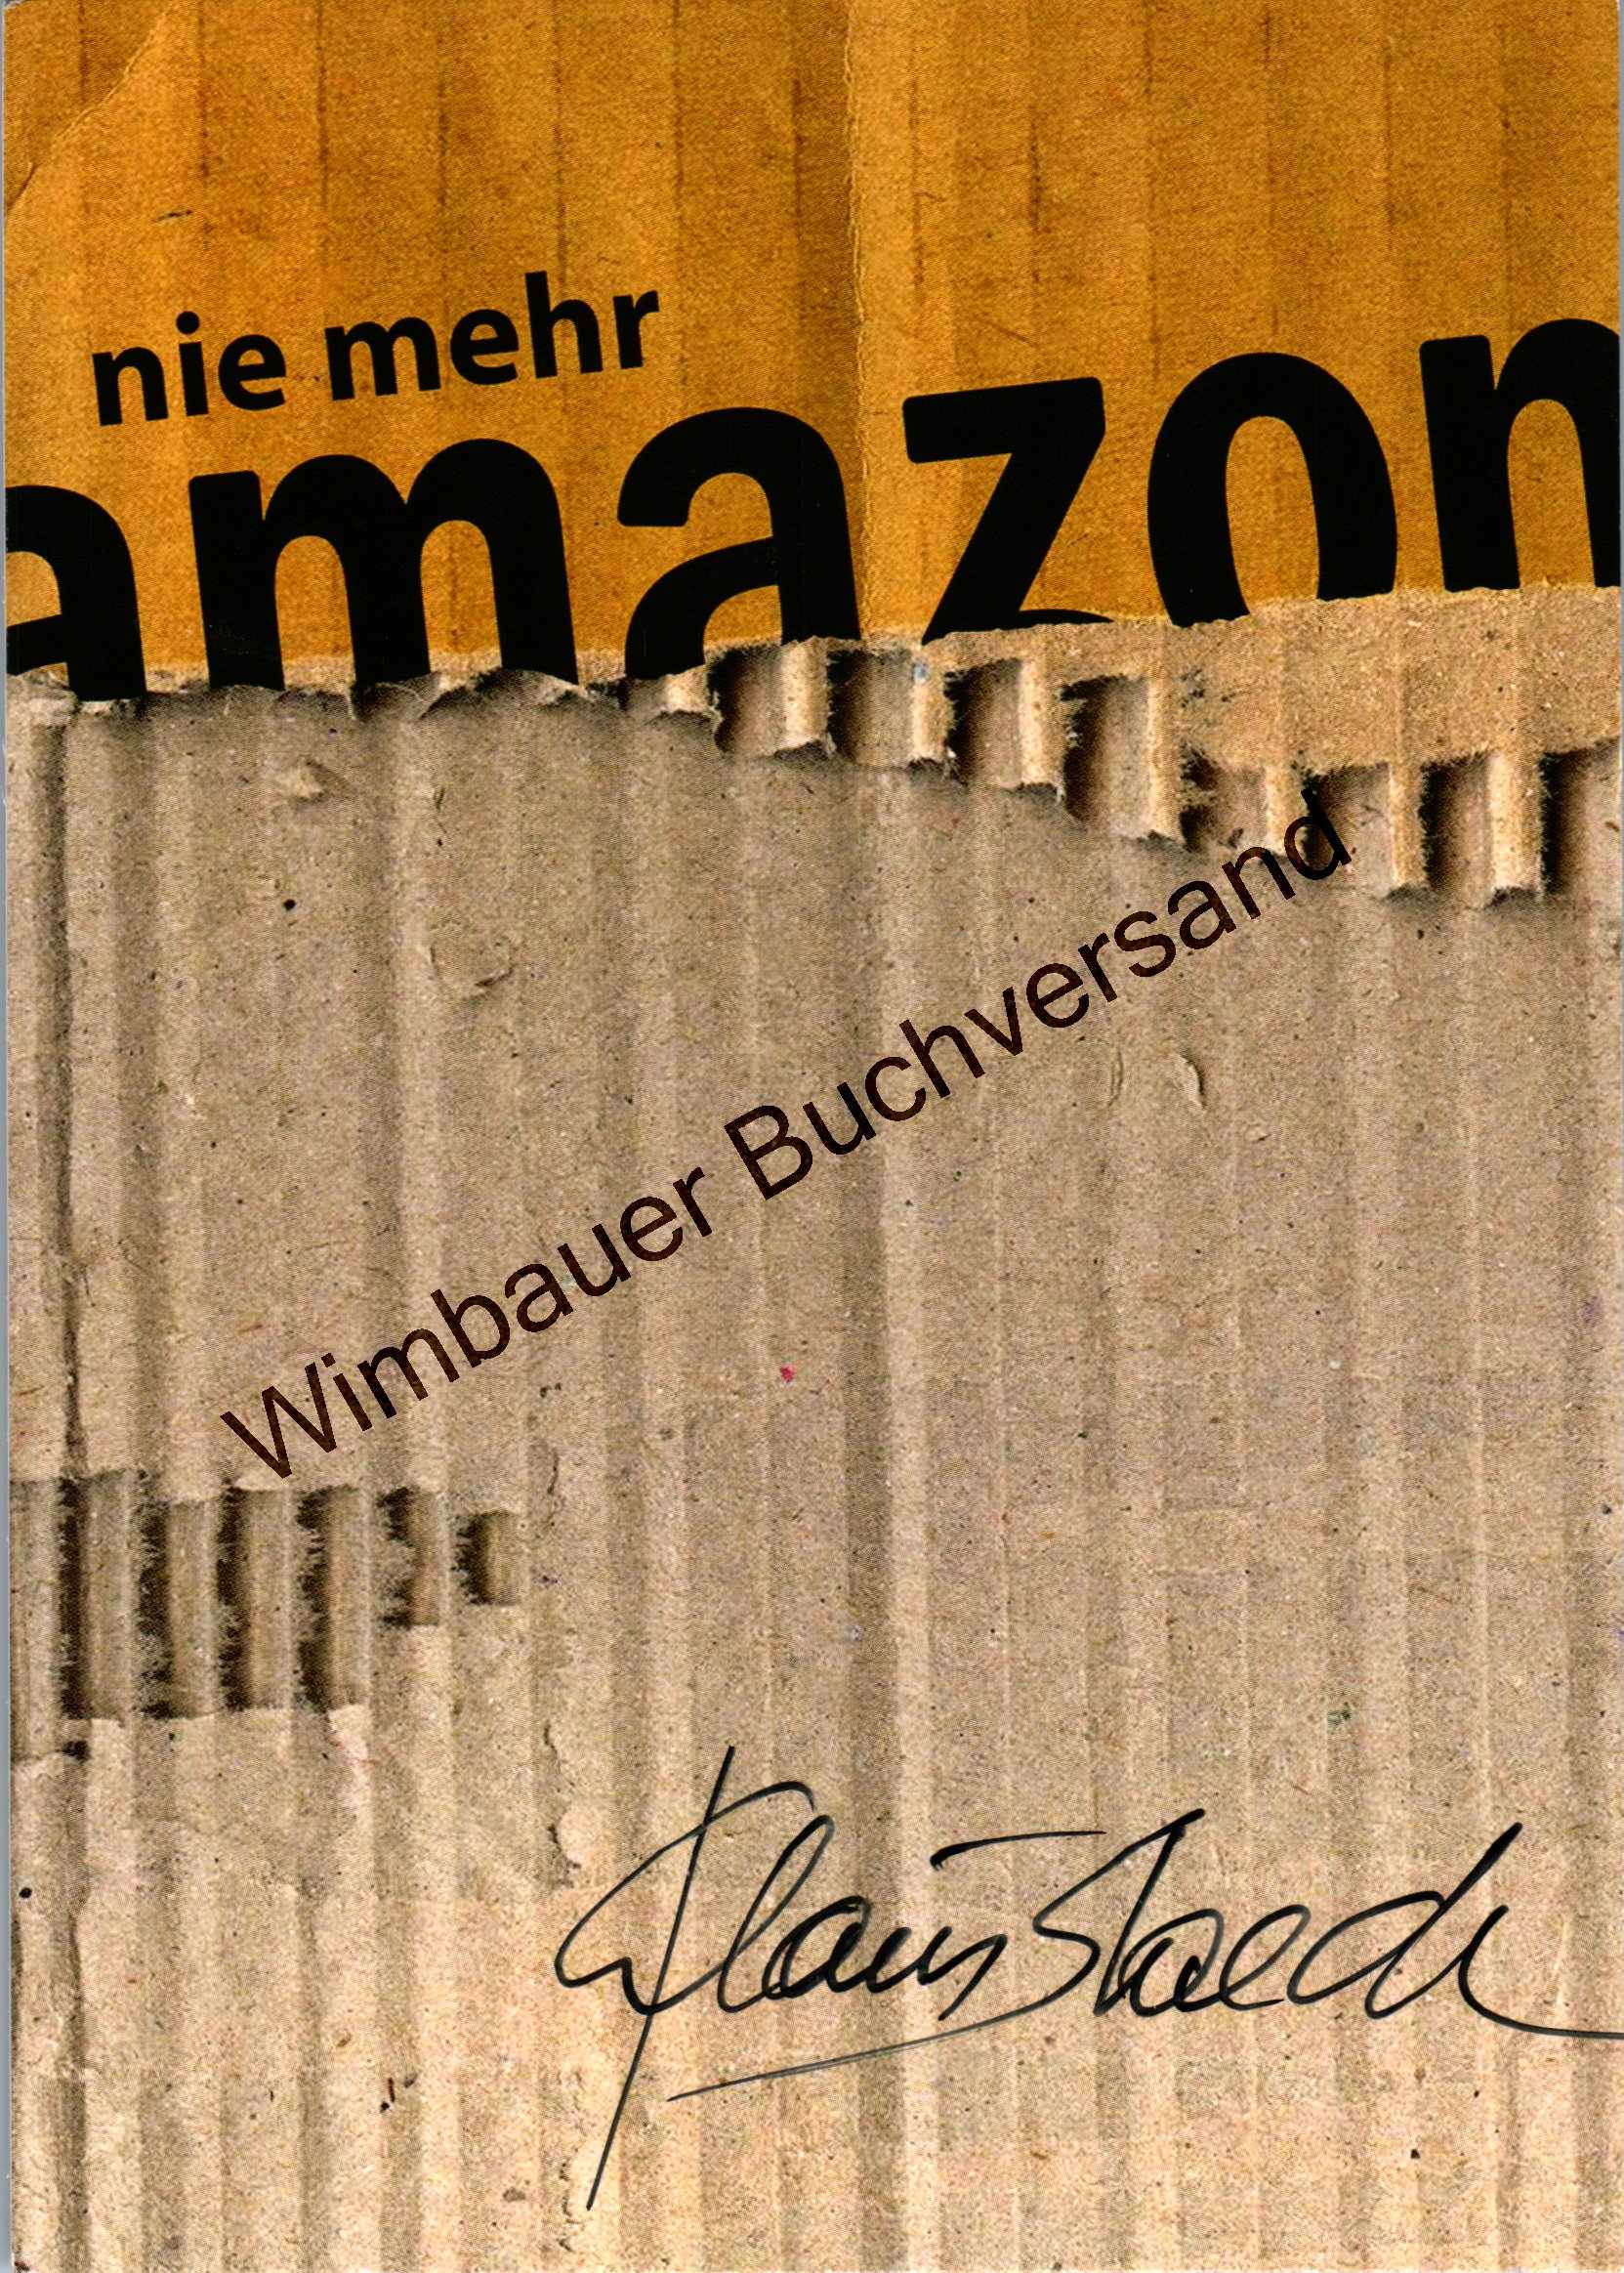 original-autogramm-klaus-staeck-nie-mehr-amazon-autograph